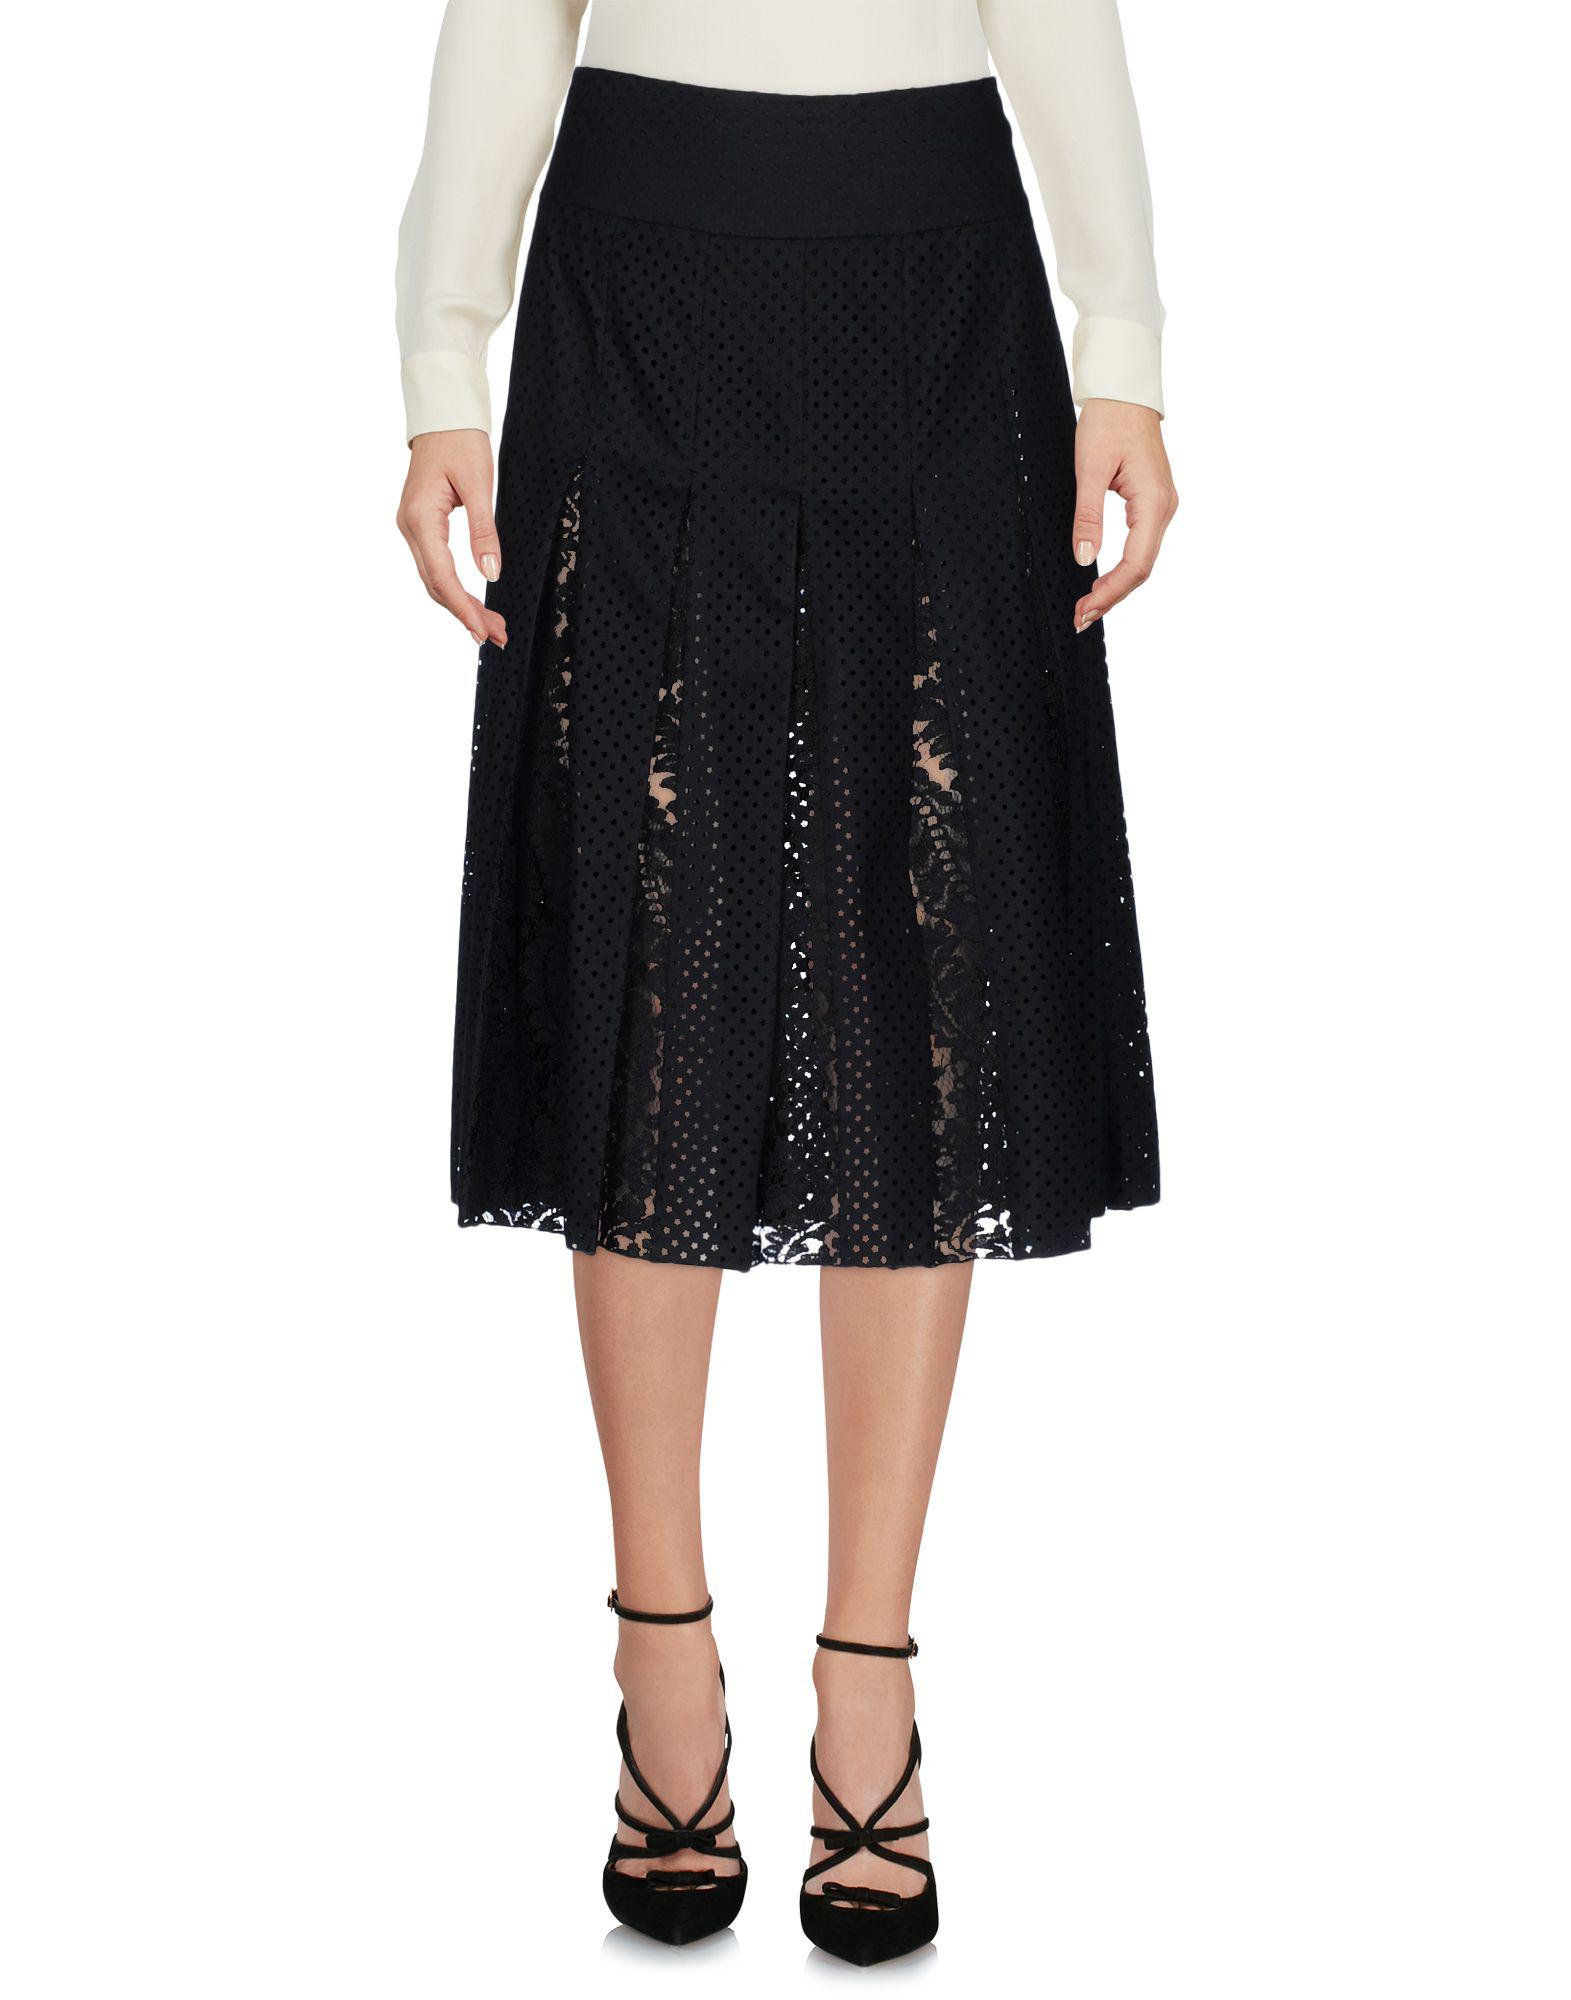 N°21 Lace 3/4 Length Skirt in Black - Lyst